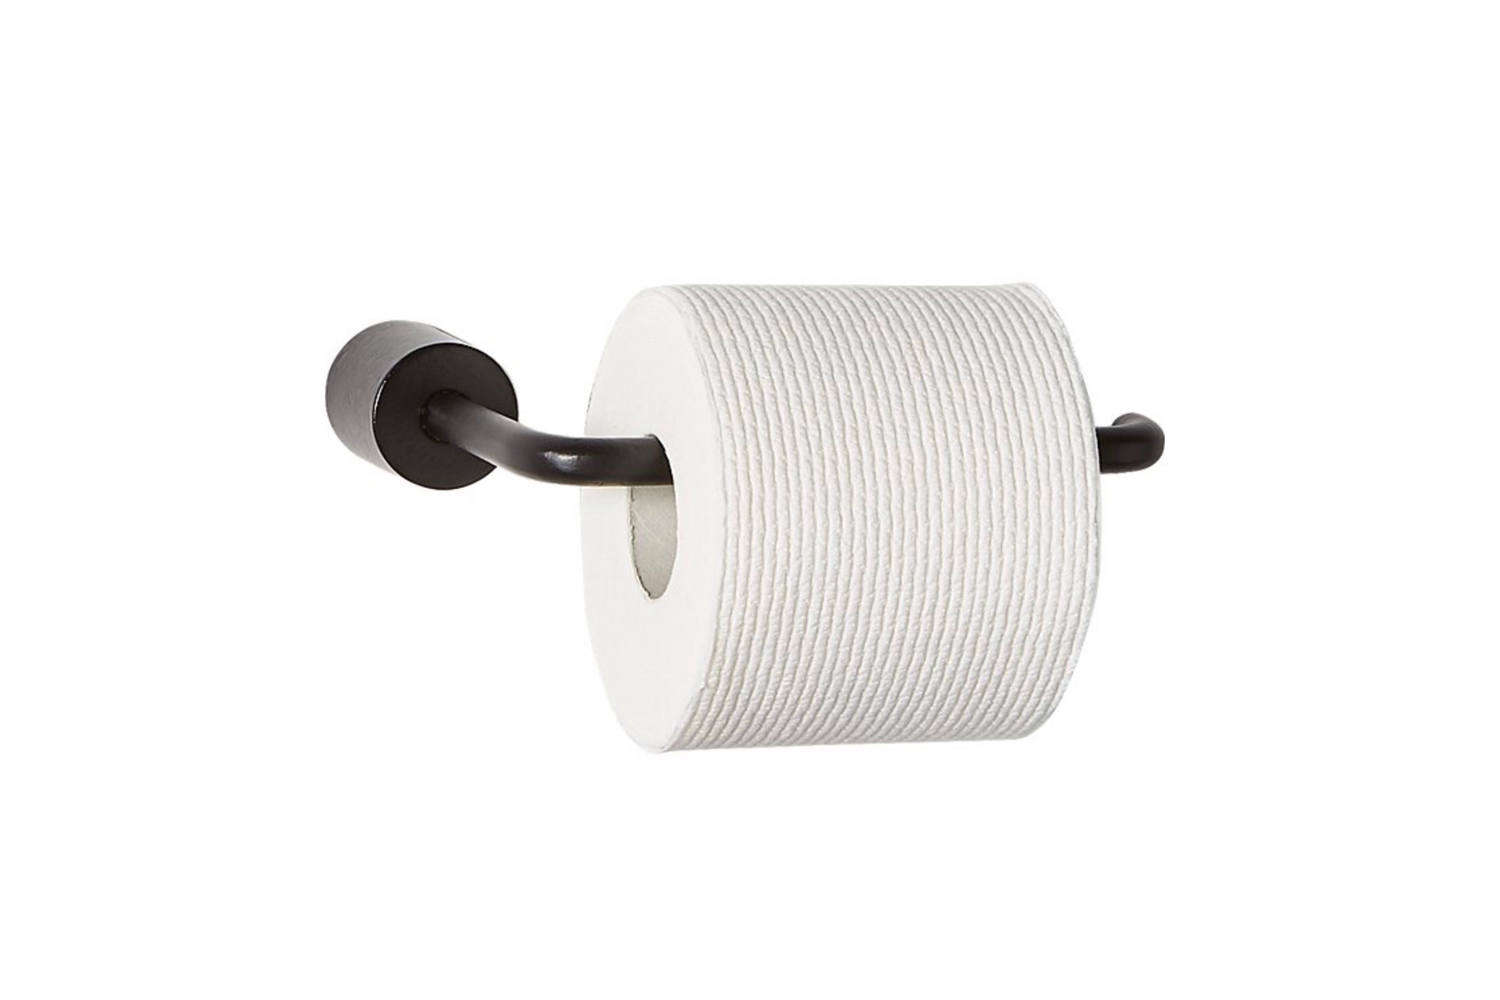 https://www.remodelista.com/wp-content/uploads/2020/05/cb2-rough-cast-toilet-paper-holder.jpg